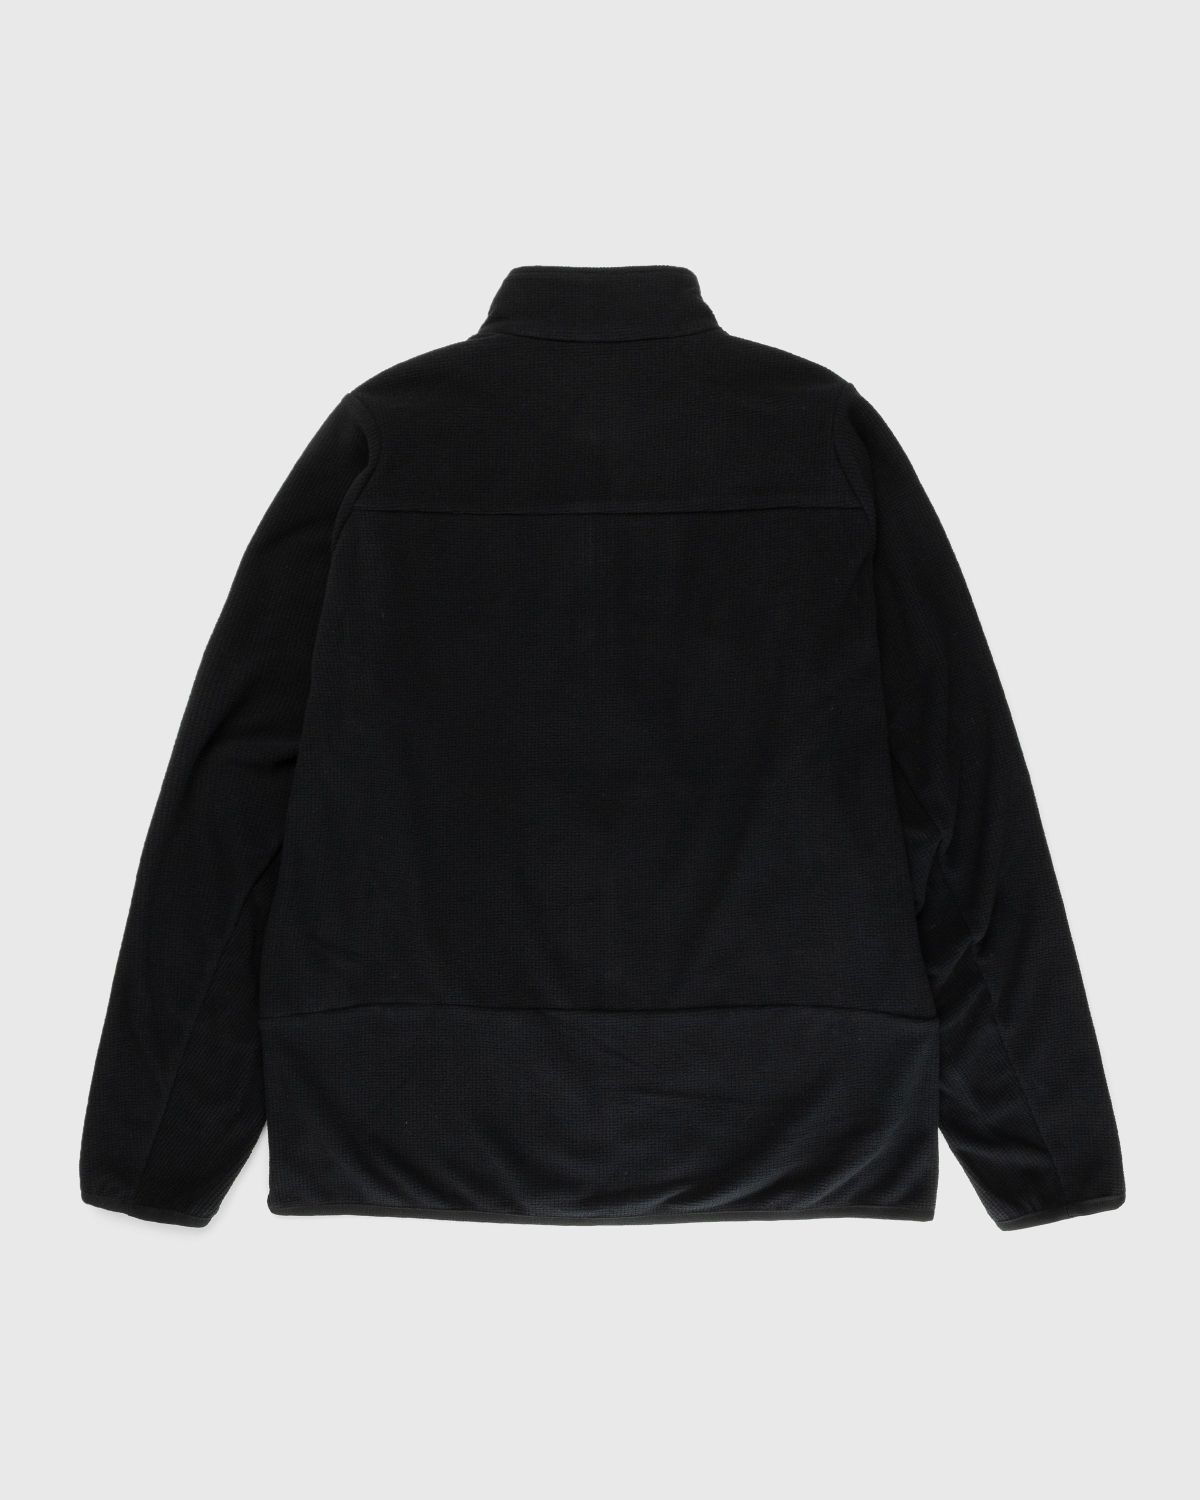 Snow Peak – Grid Fleece Jacket Black | Highsnobiety Shop